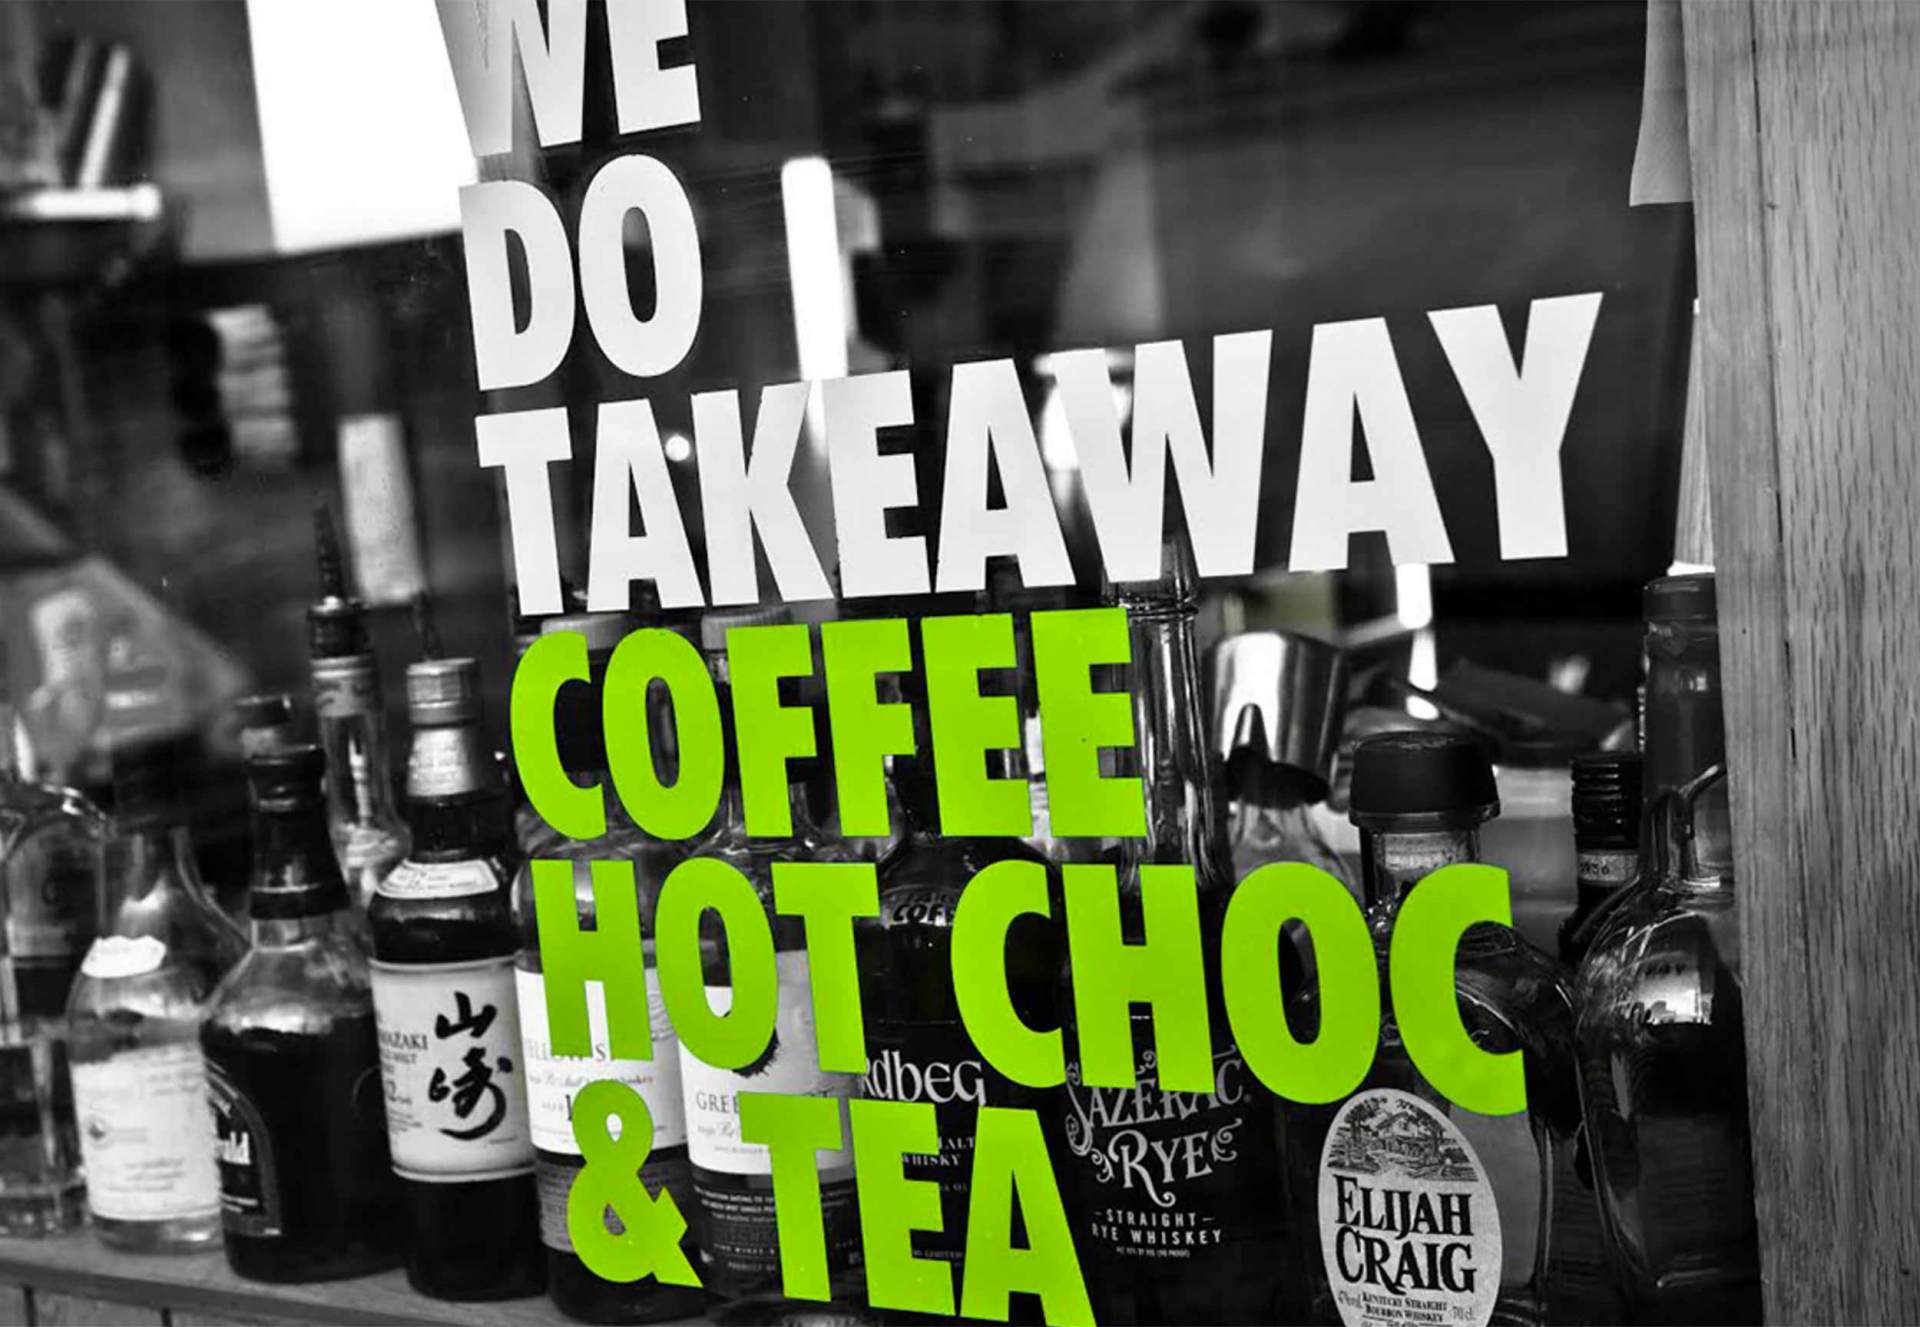 Green 19 restaurant front window that says 'we do takeaways coffee hot choc & tea' designed by 'Dublin Design Studio'